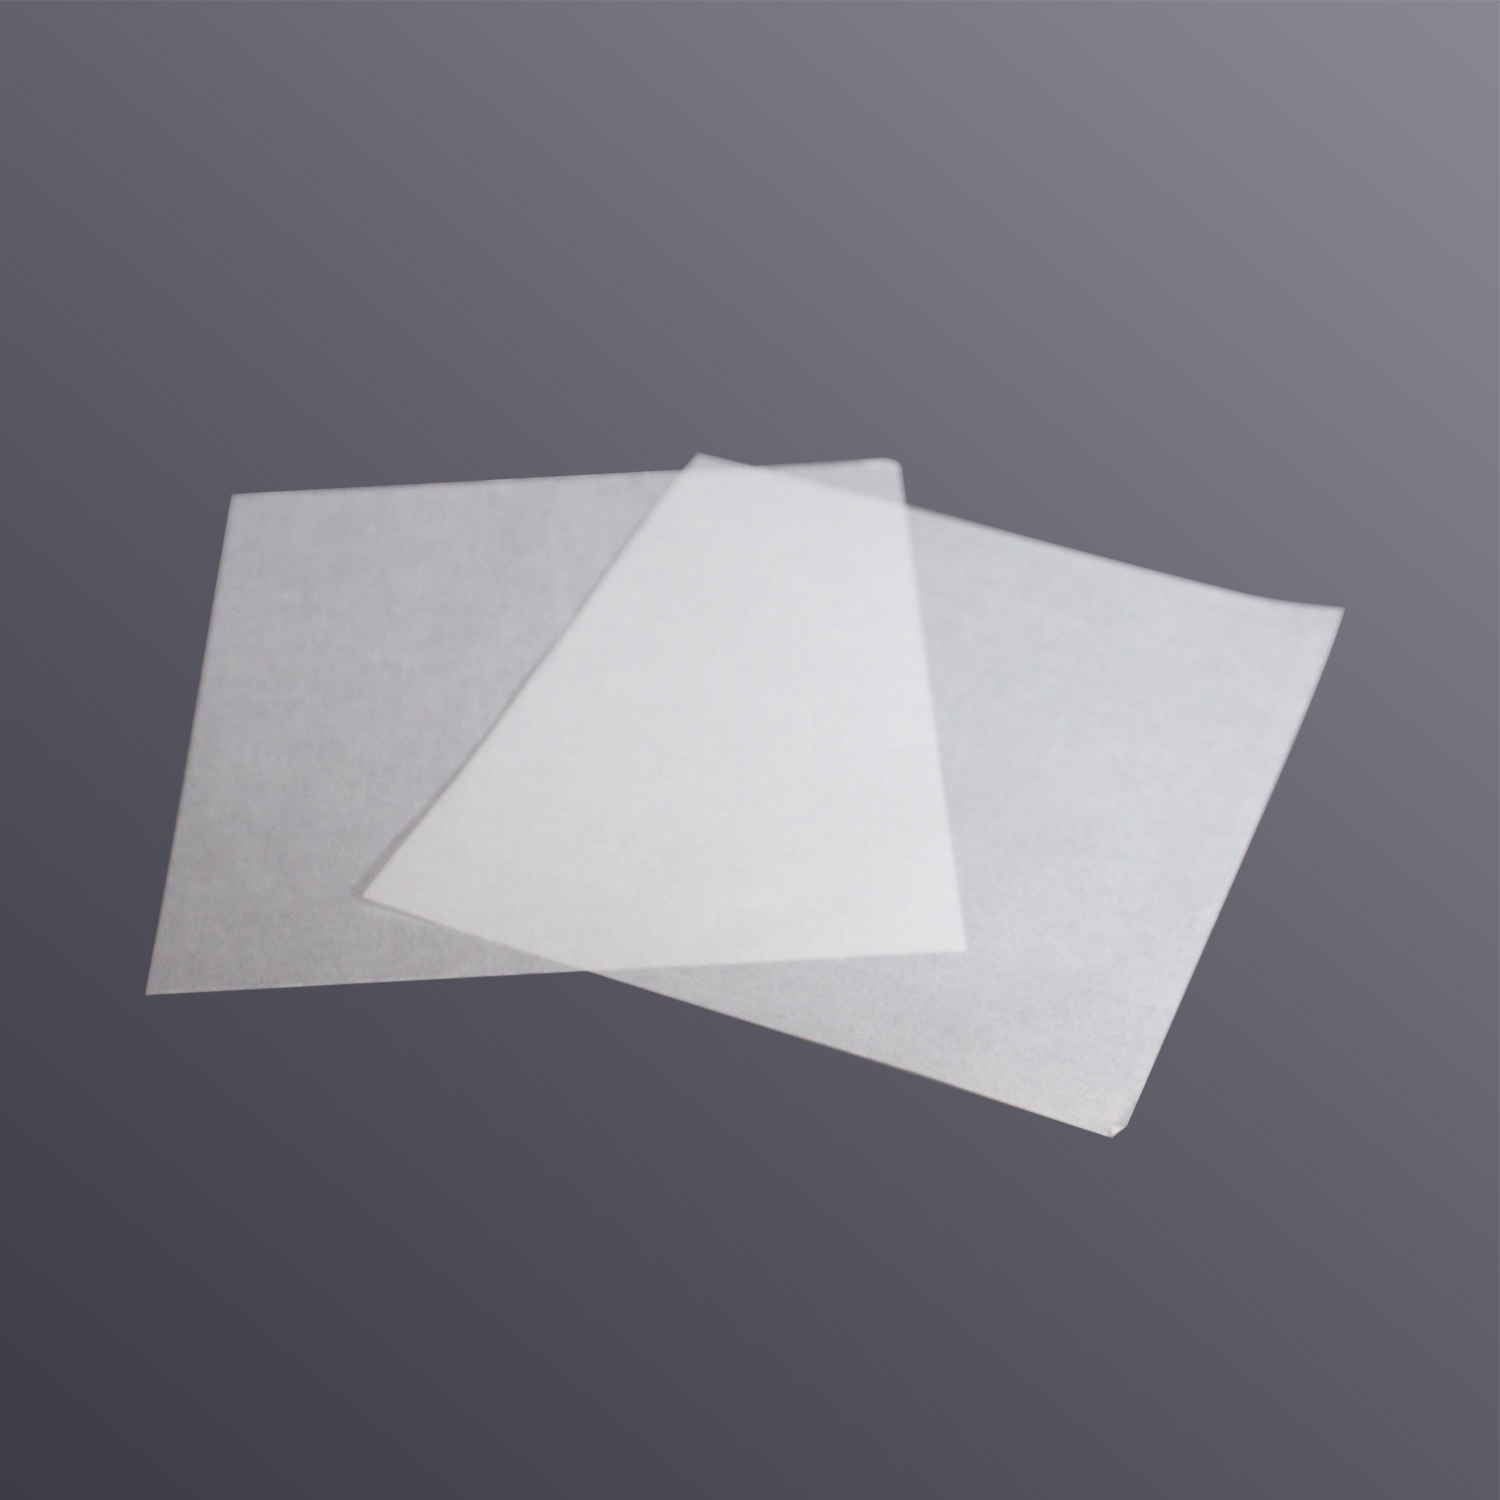 称量纸(150x150mm)